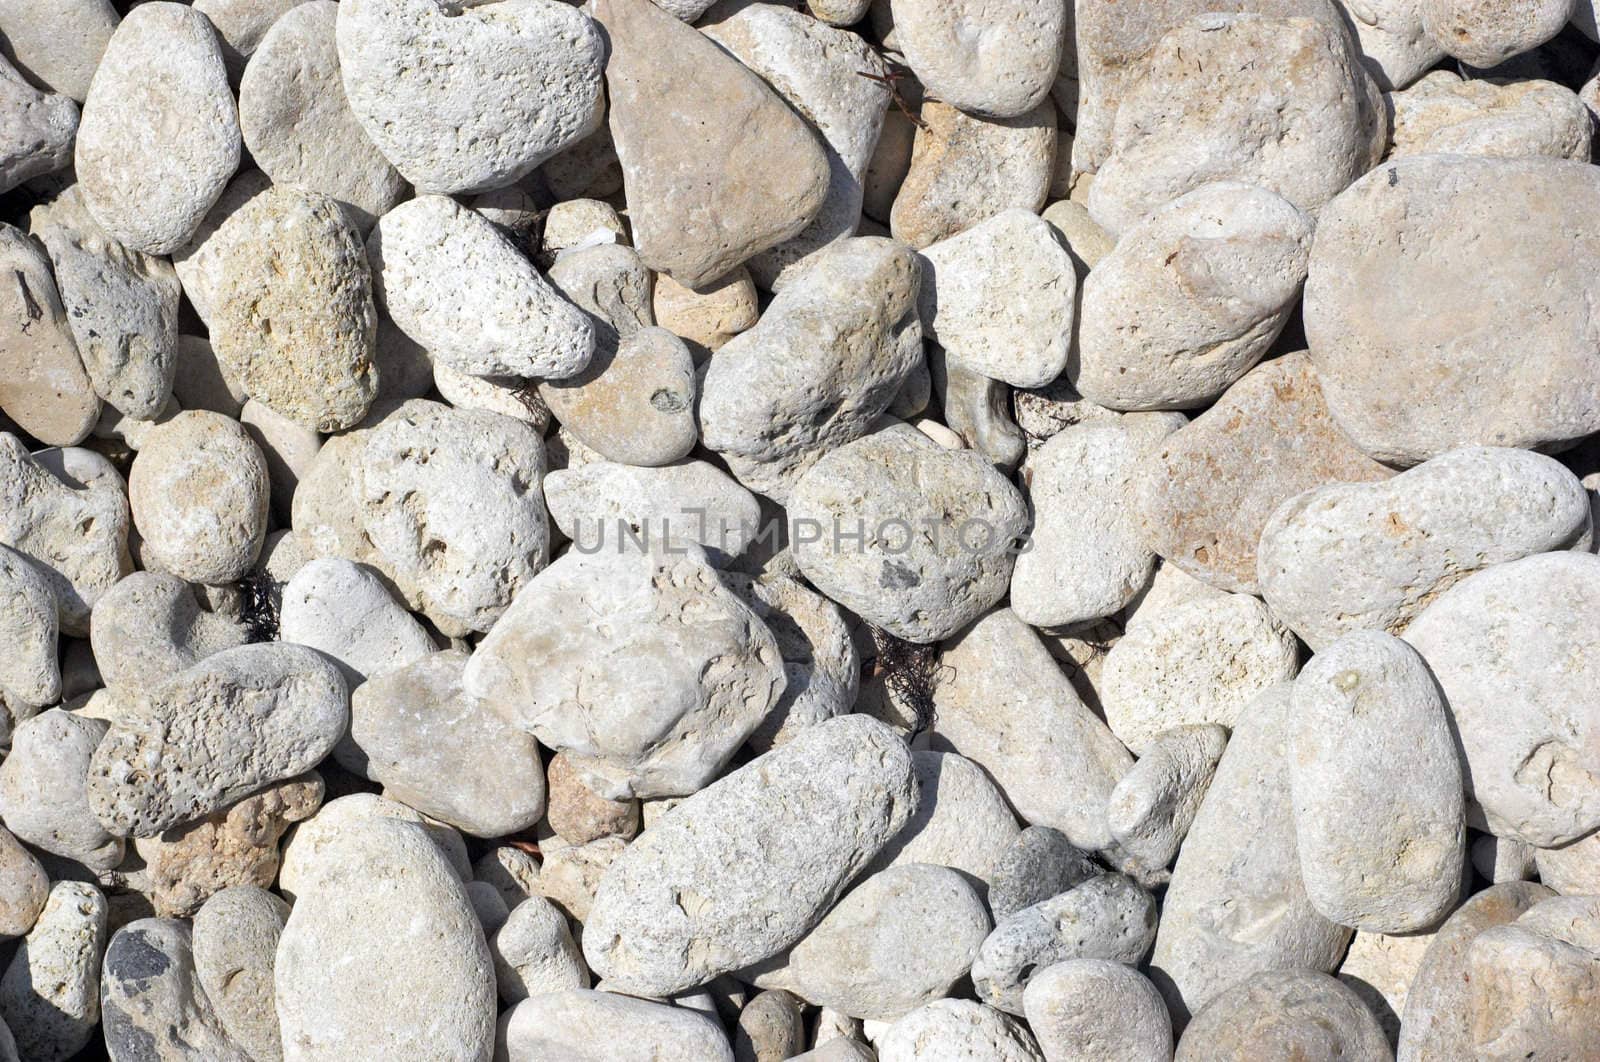 limestone pebbles on the beach under bright sun. texture. 